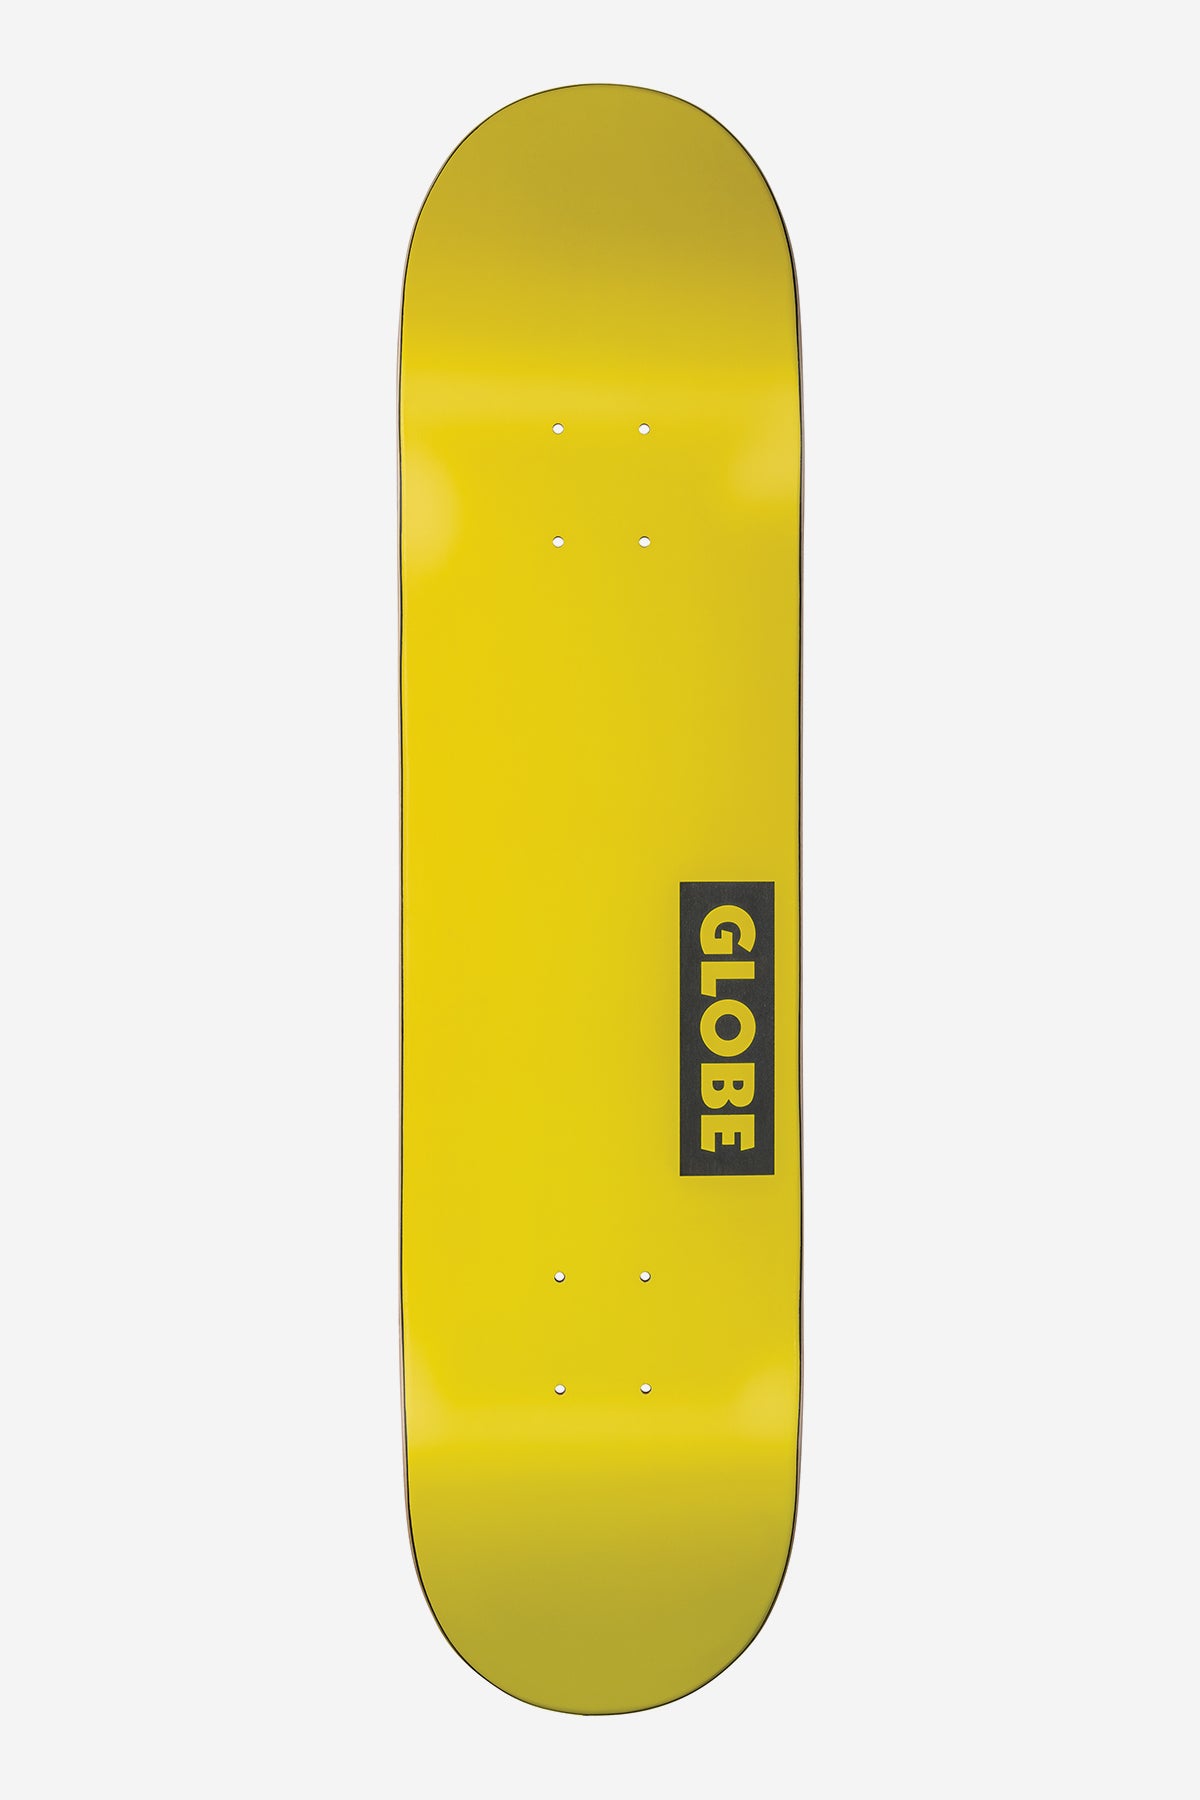 goodstock neon yellow 7,75" skateboard deck